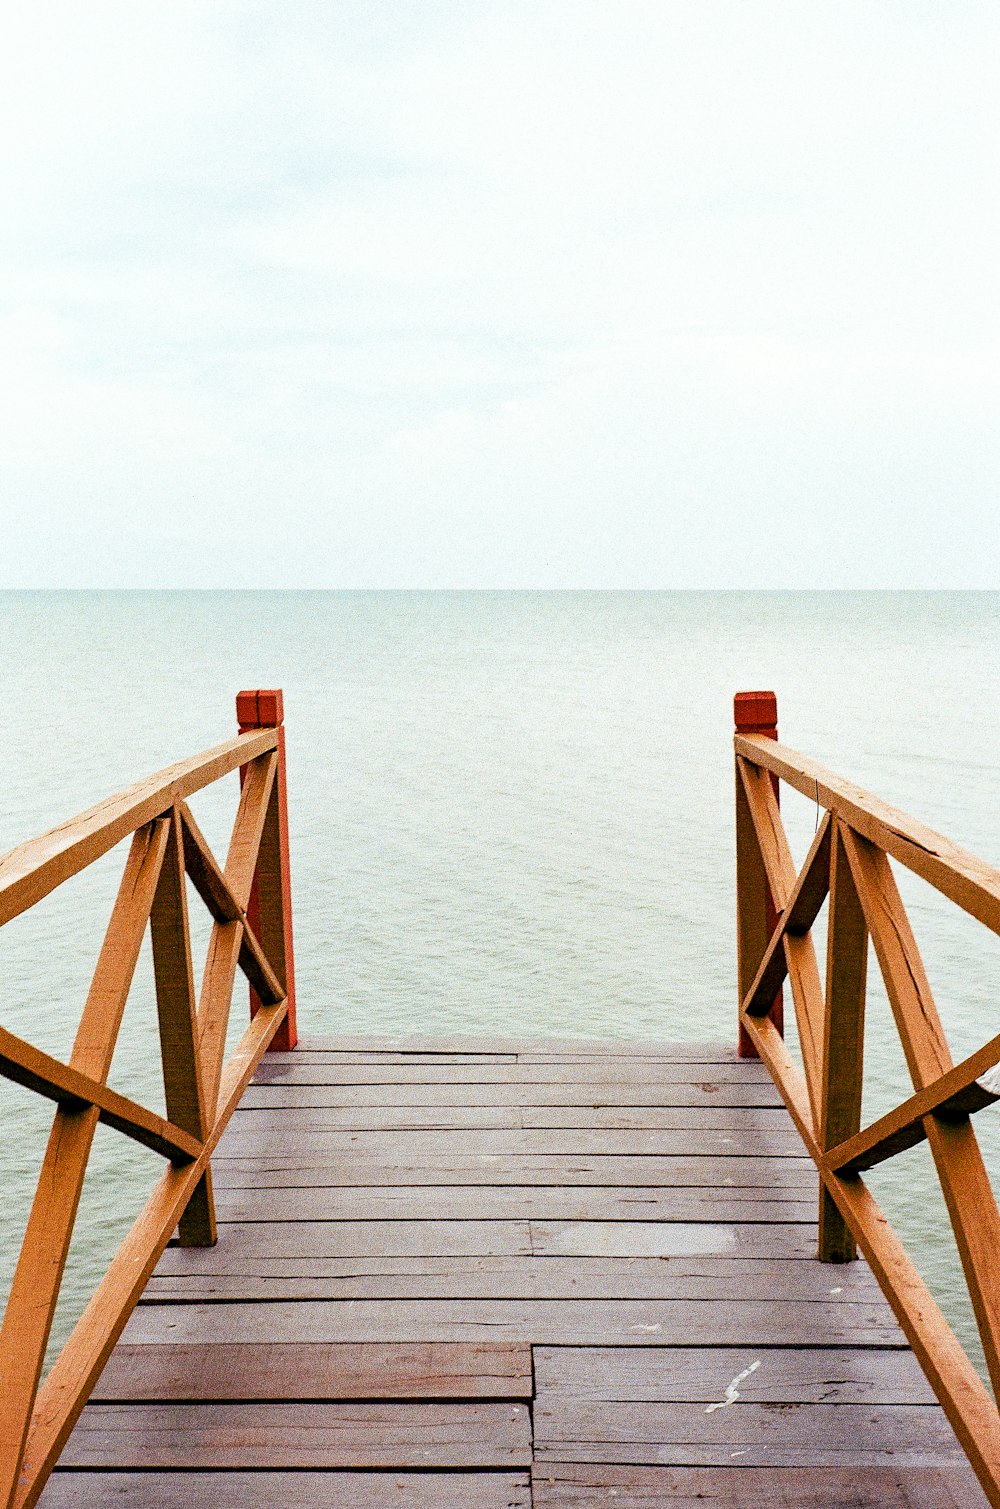 a wooden dock extending into the ocean